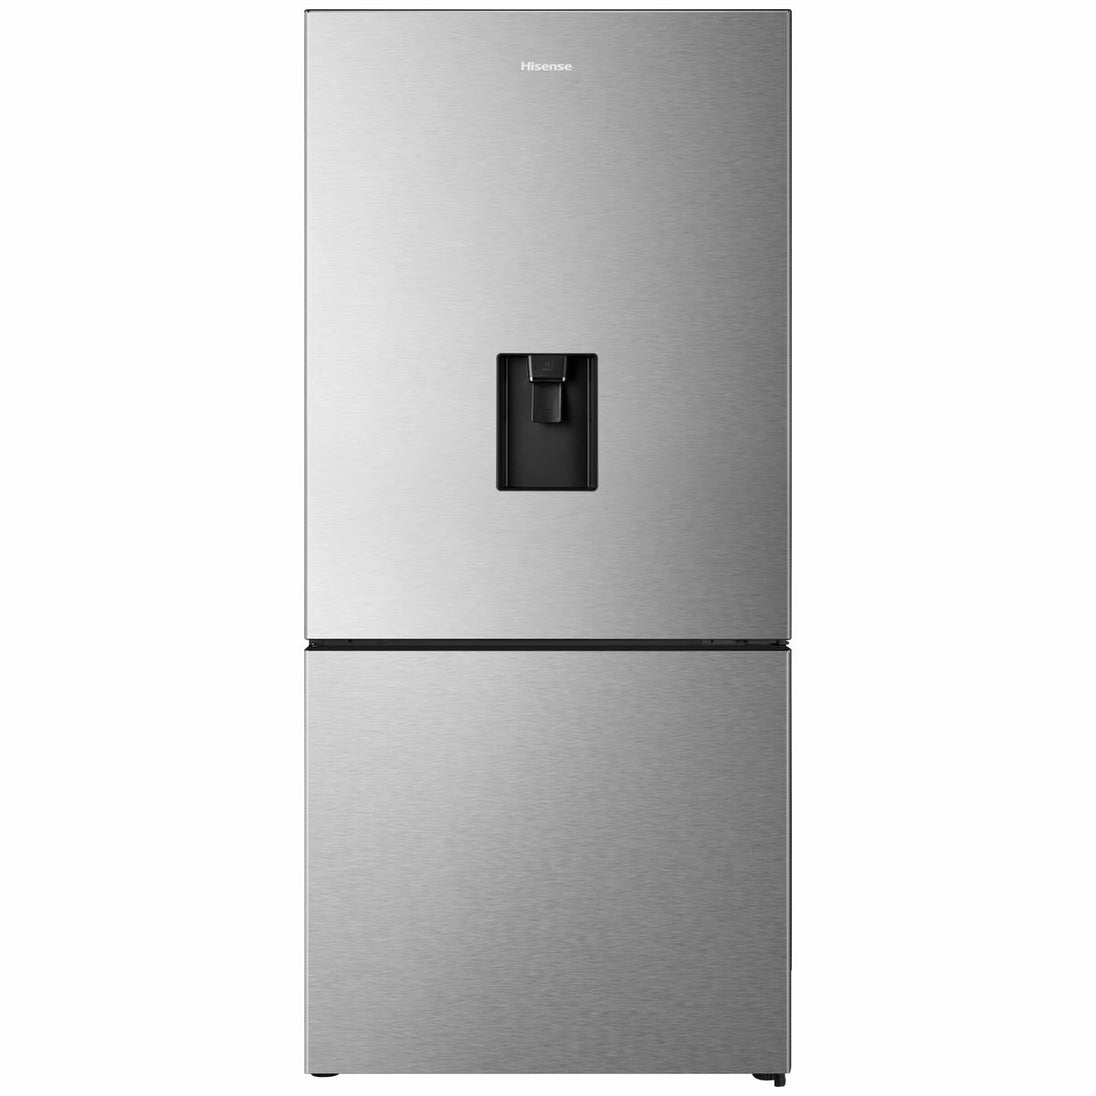 hisense-482l-pureflat-bottom-mount-refrigerator-hrbm482sw-1-3490a79b-high